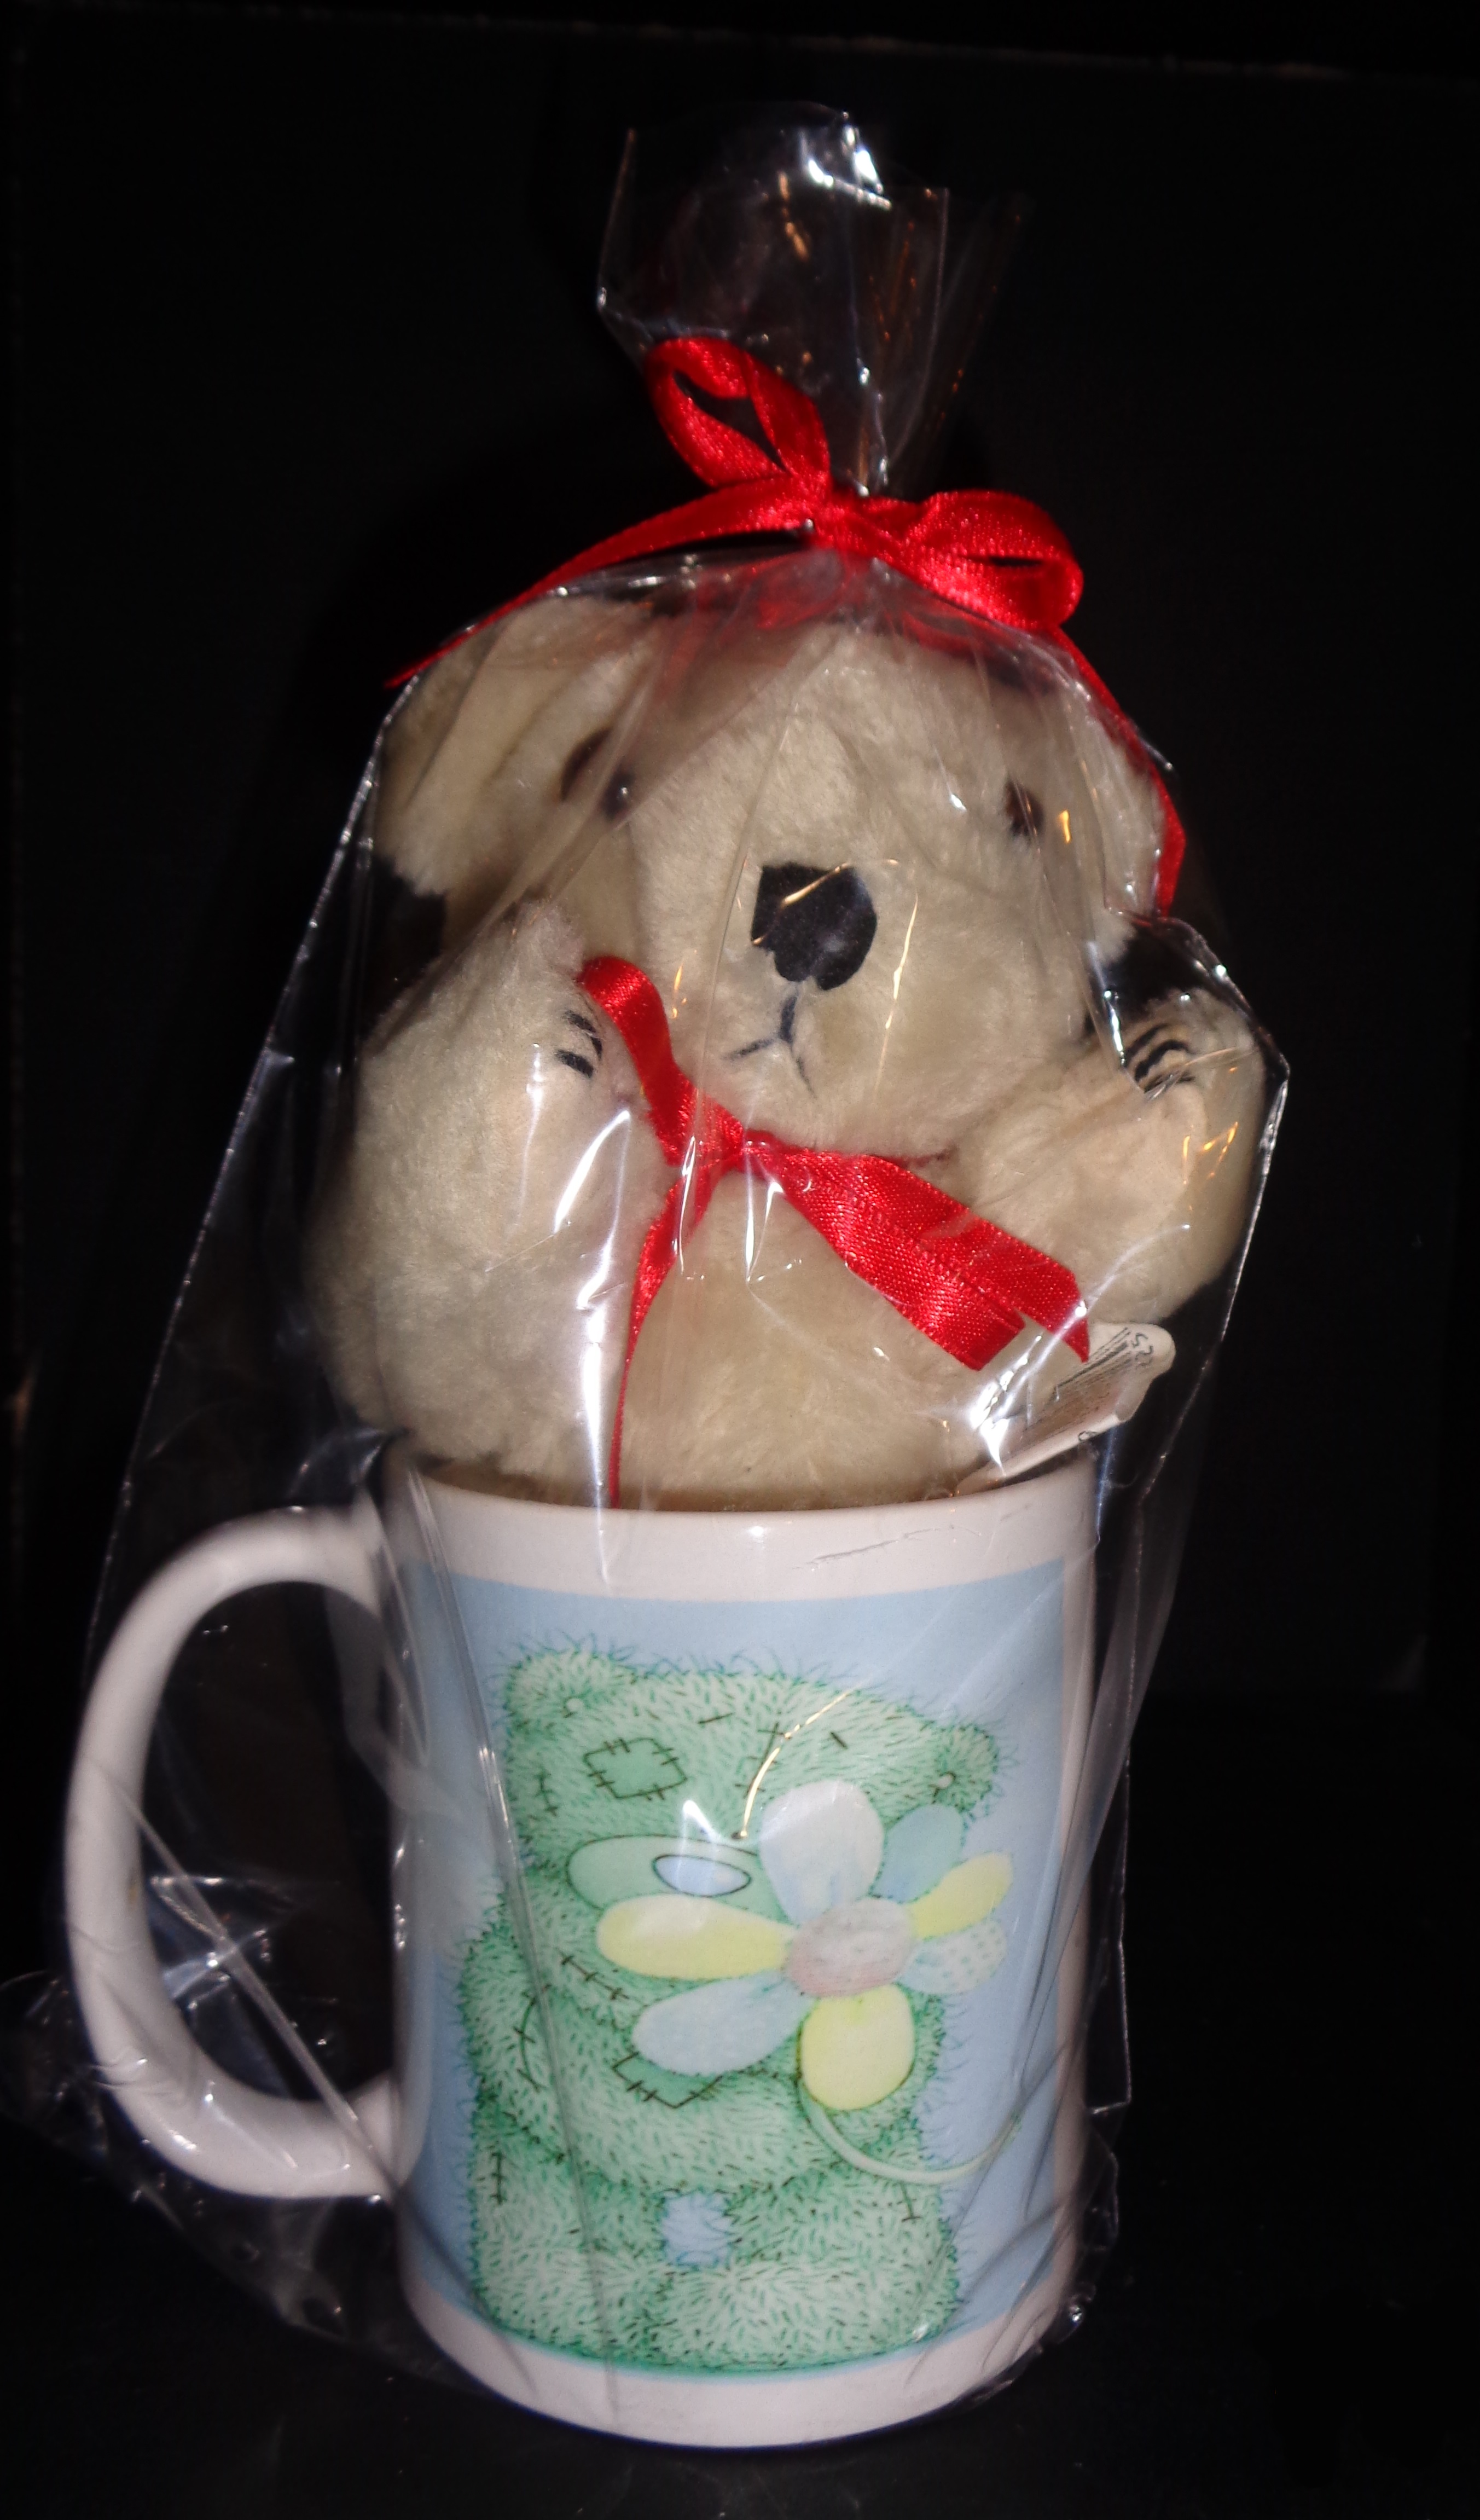 teddy bear coffee mugs